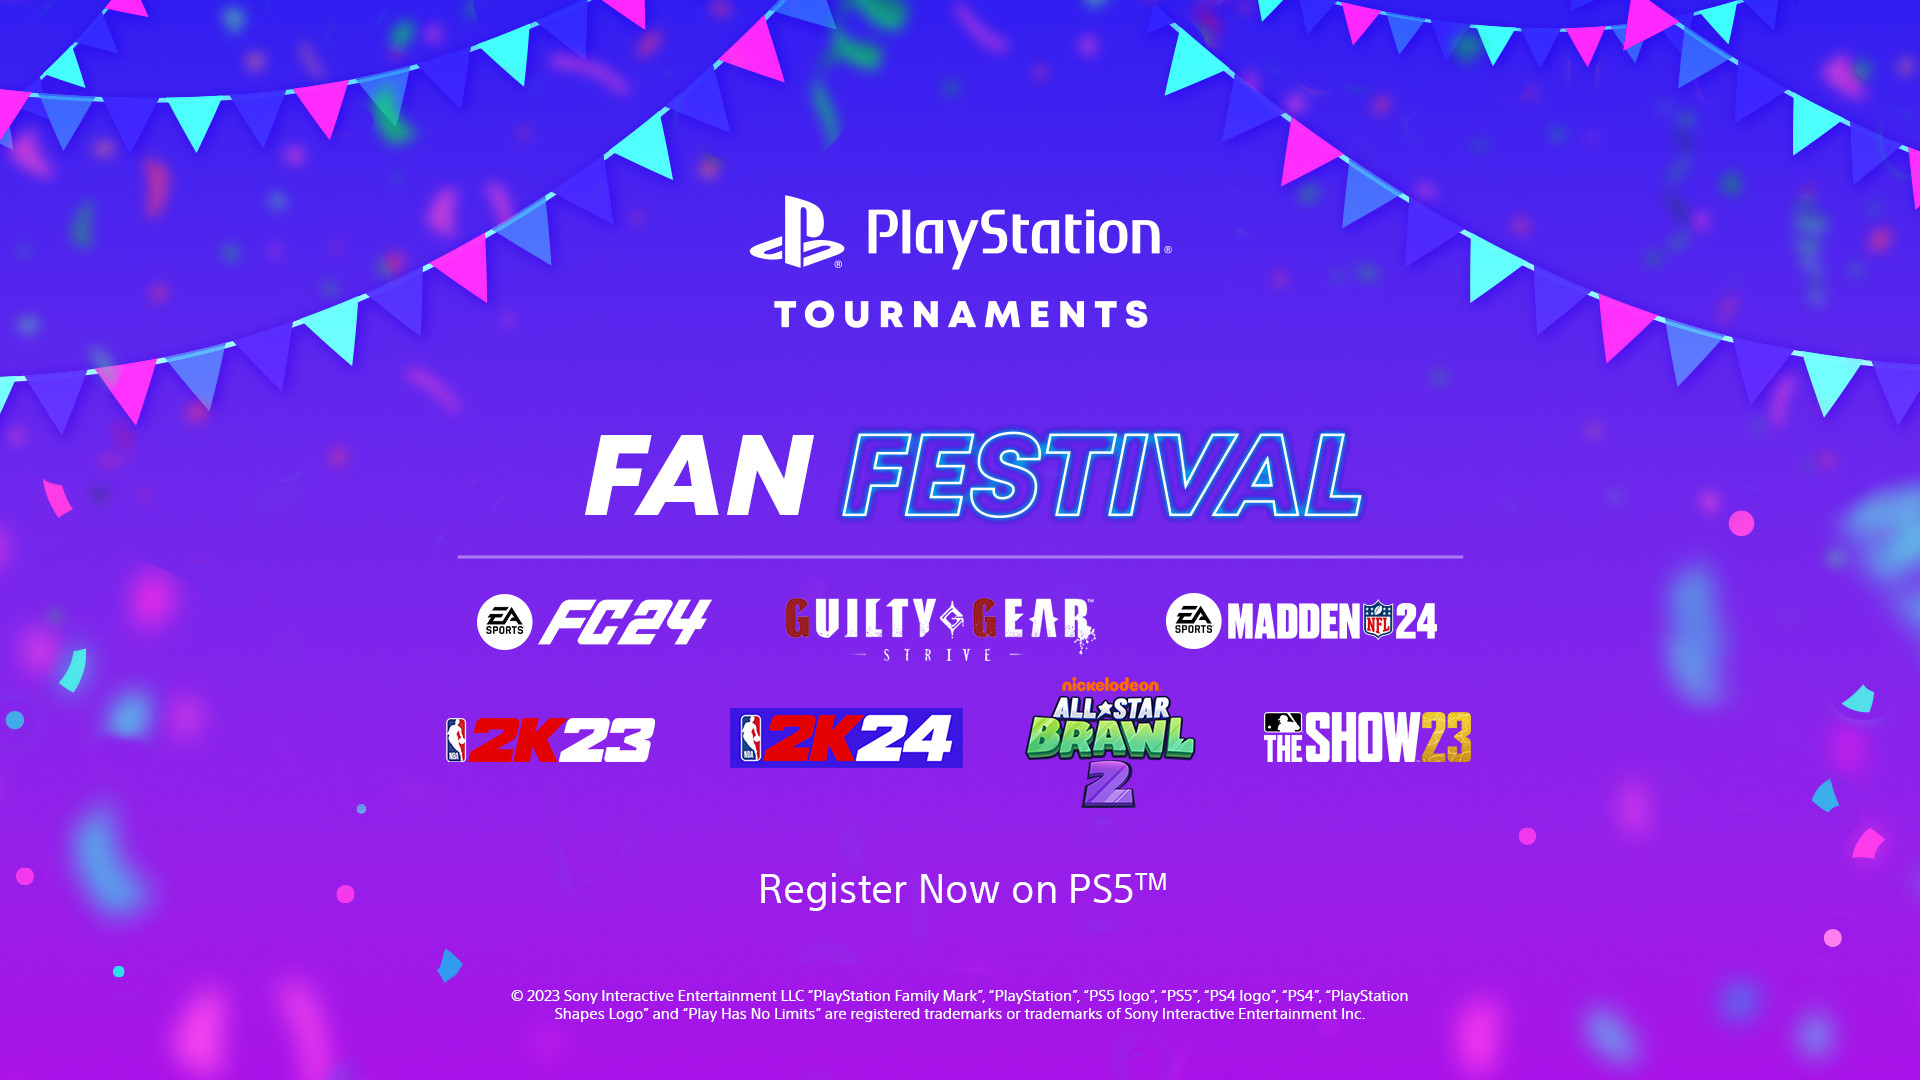 PlayStation Tournaments Fan Festival